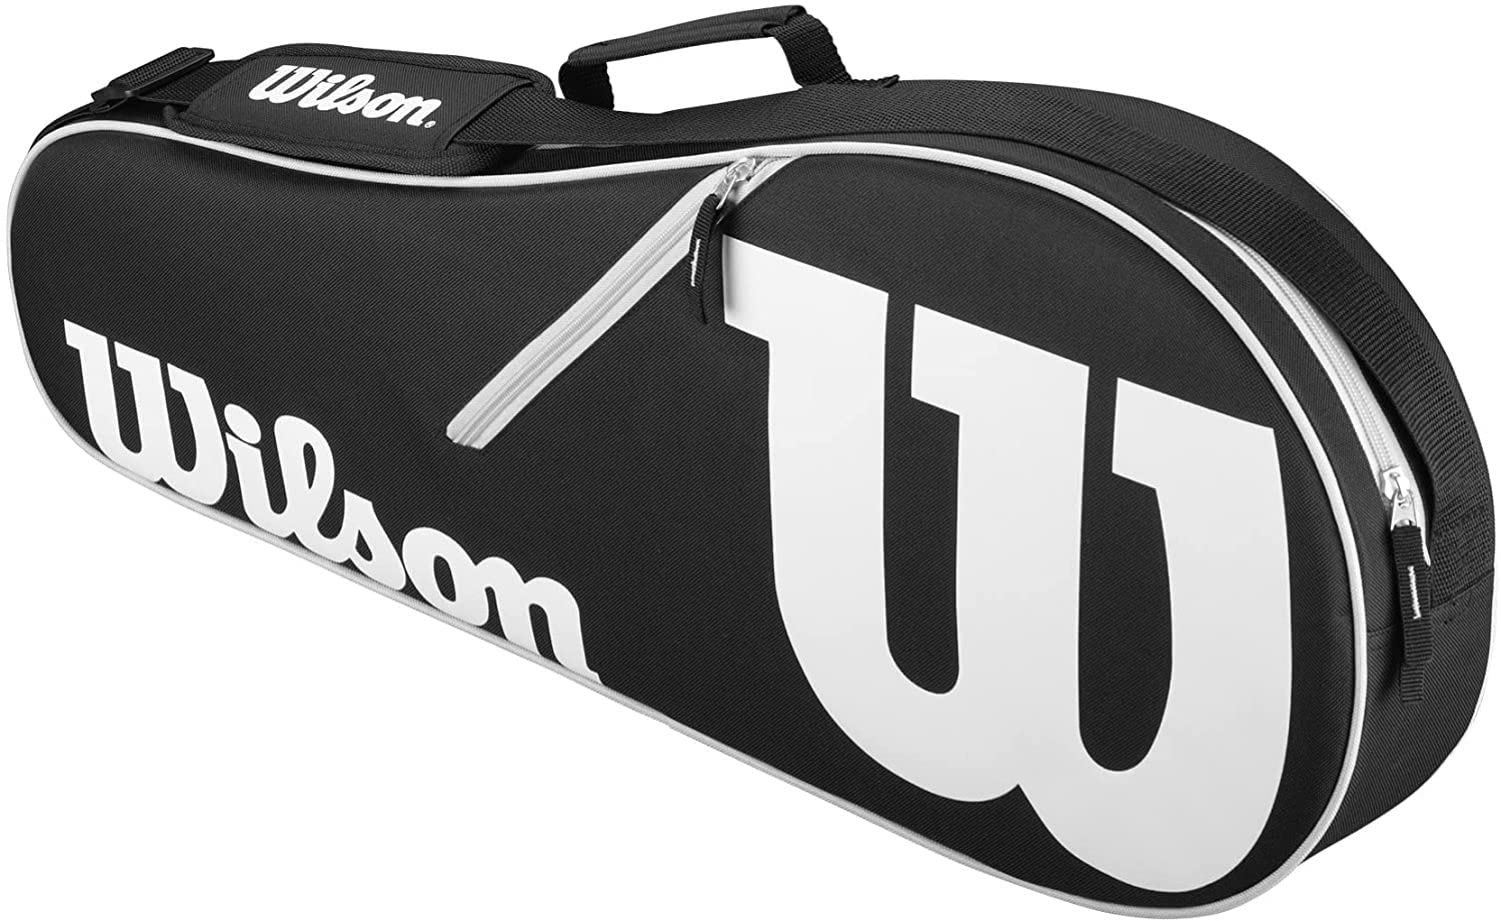 Wilson Advantage Tennis Bag Series - $24.99 at Amazon